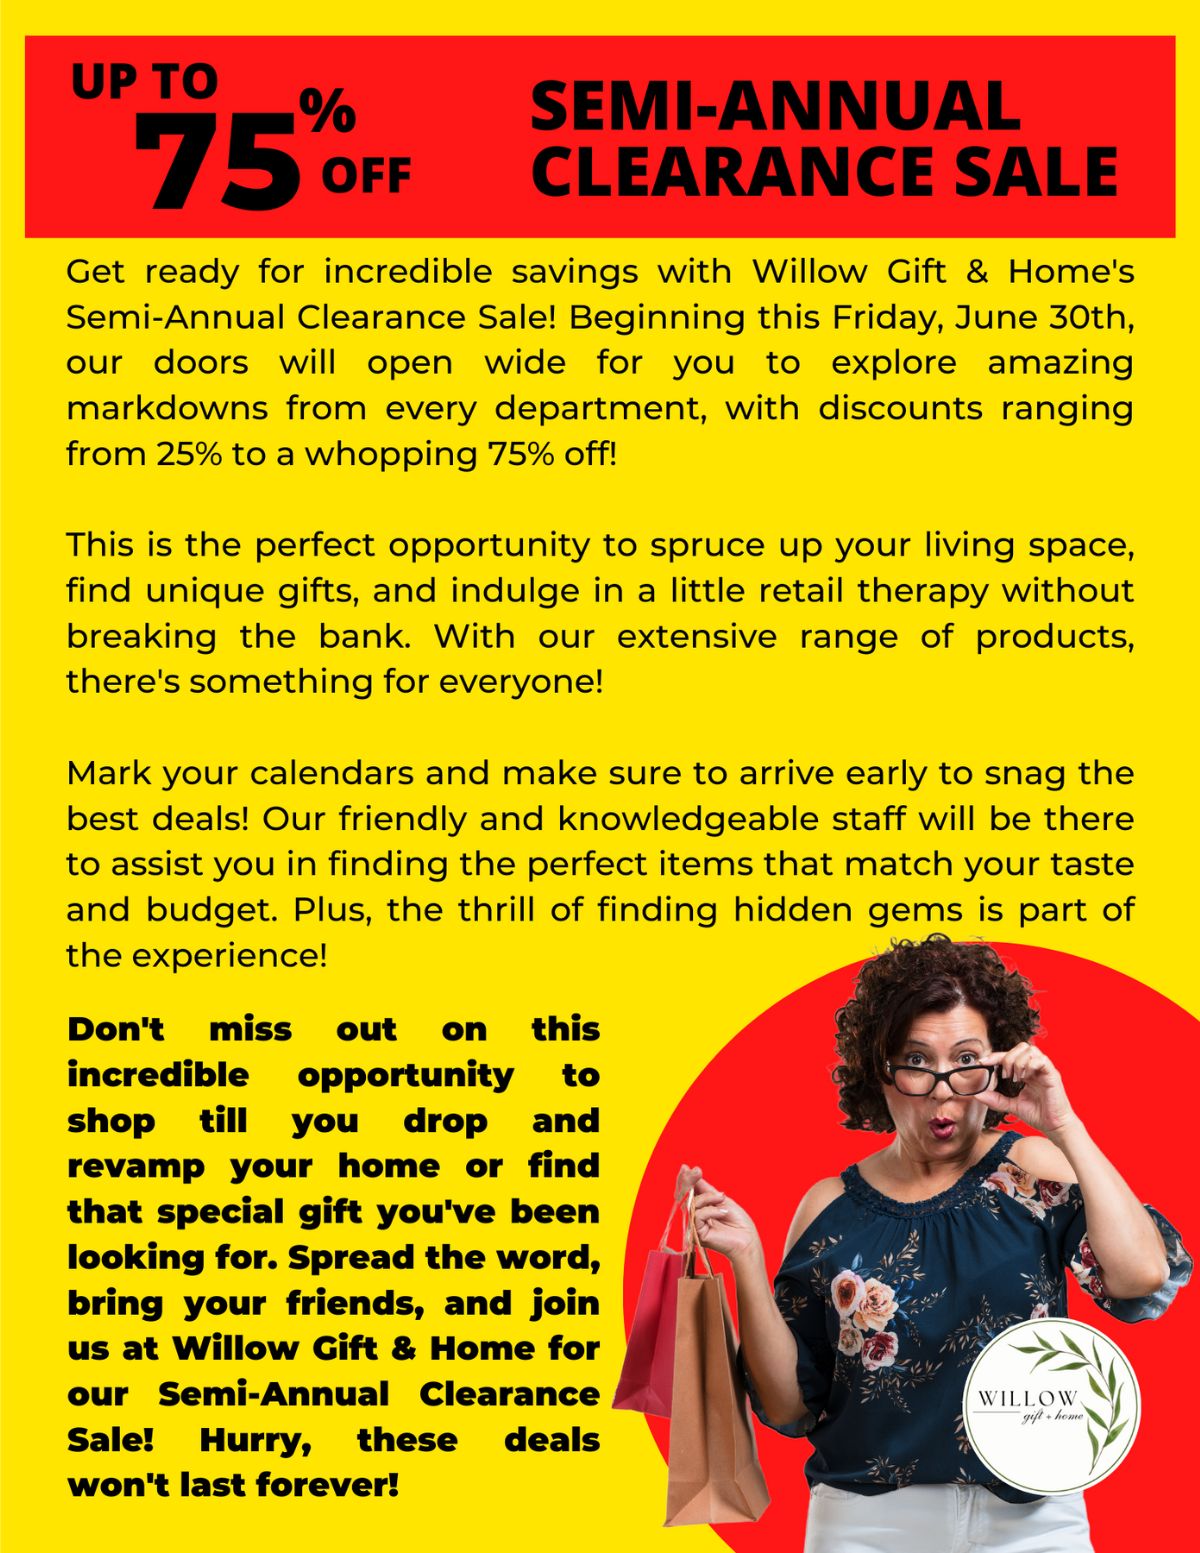 Semi-Annual Clearance Sale